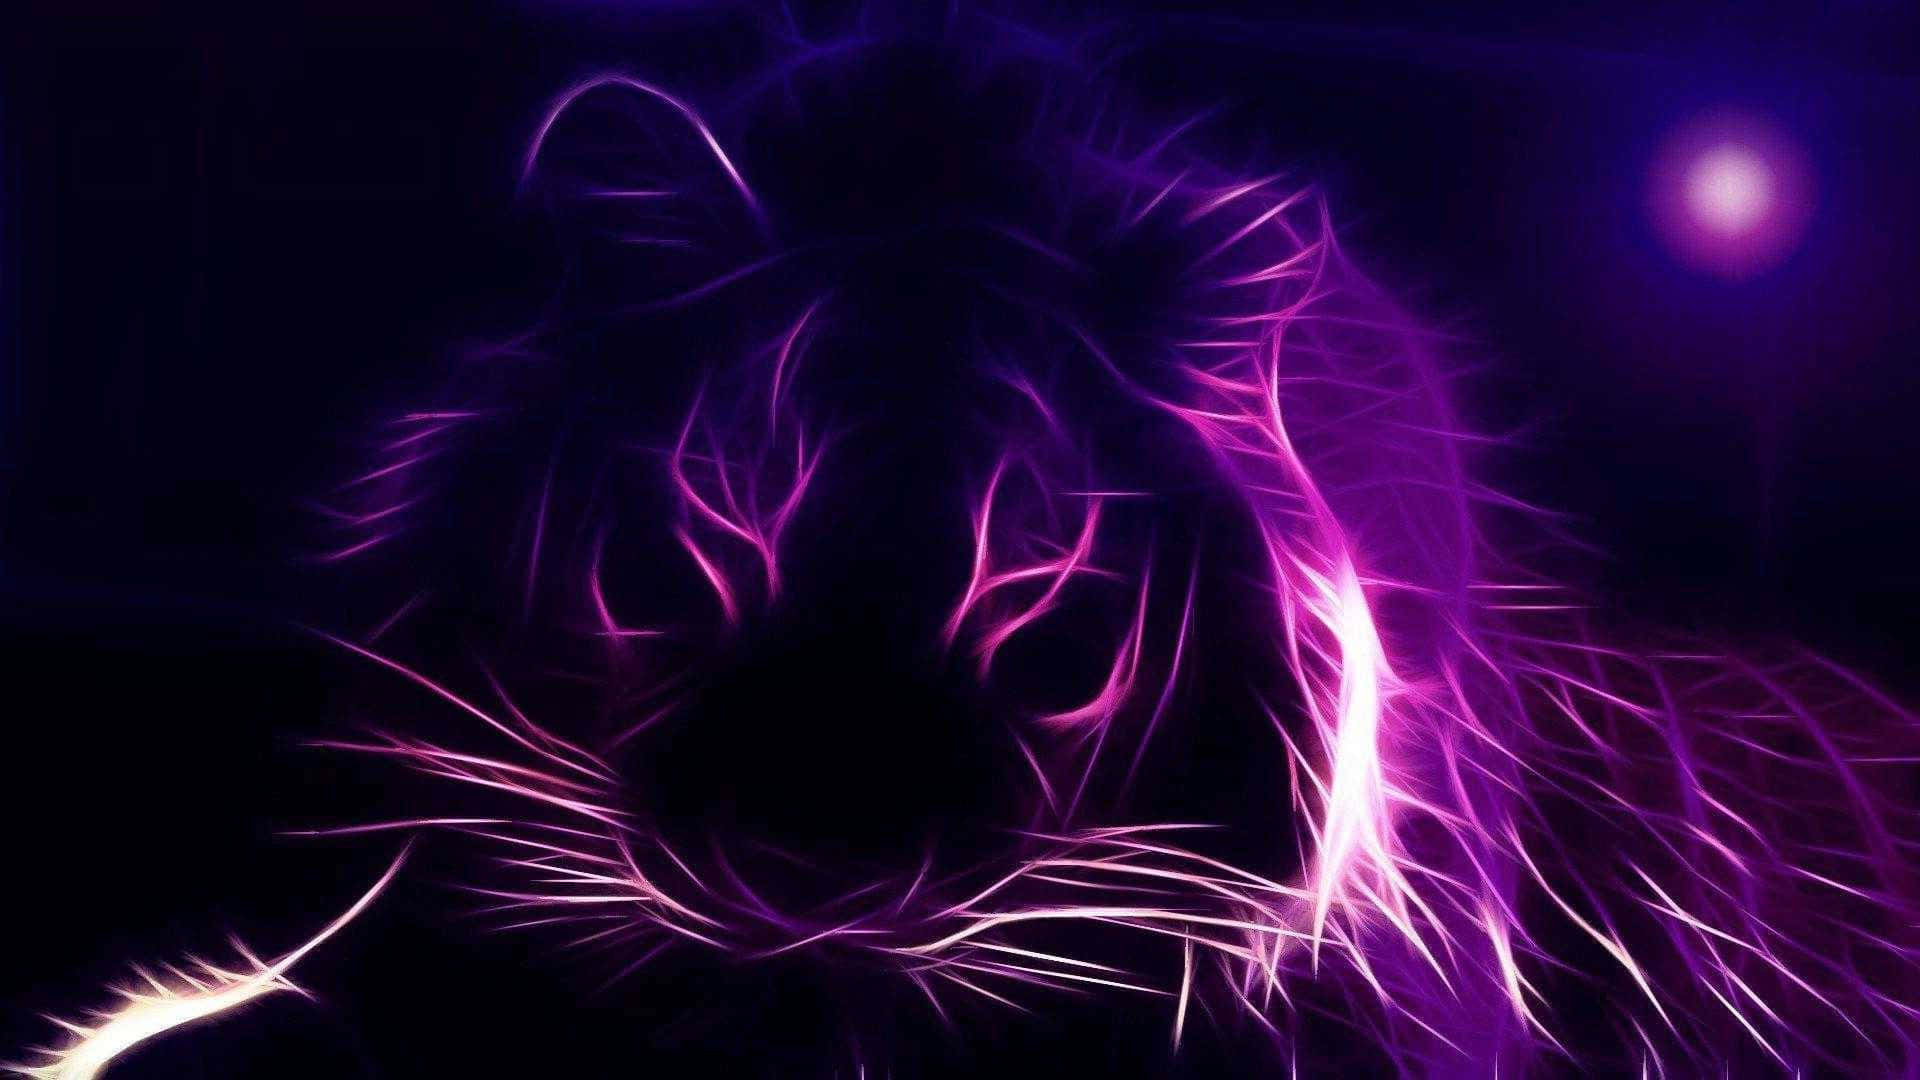 Purple Lion Wallpapers